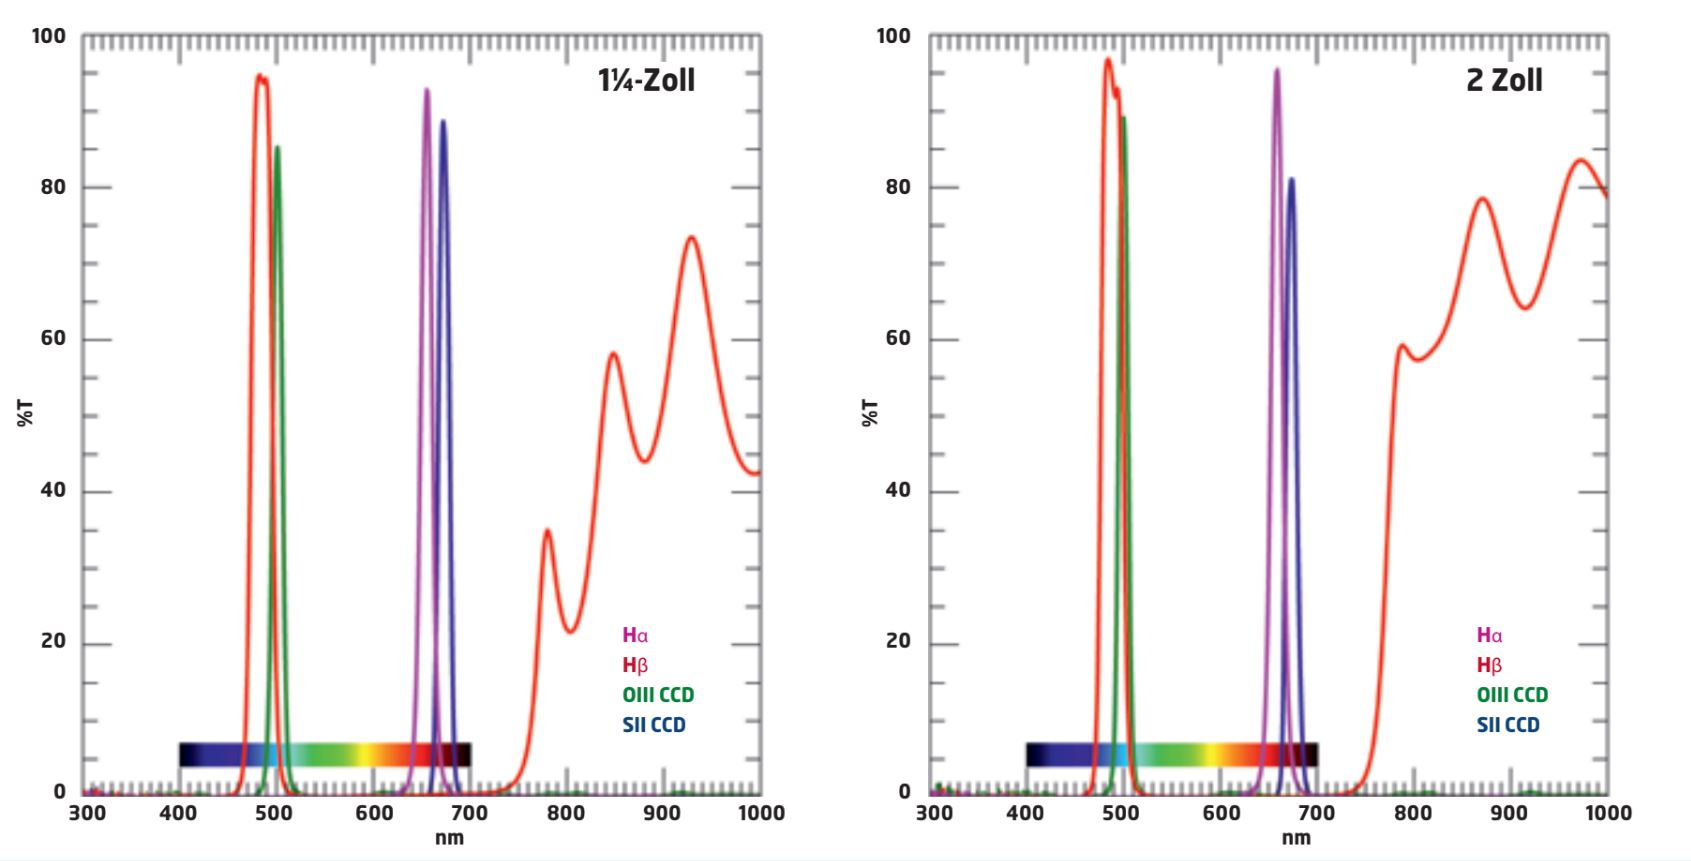 Diagramas de transmissão dos filtros Hα, Hβ, OIII CCD e SII CCD.